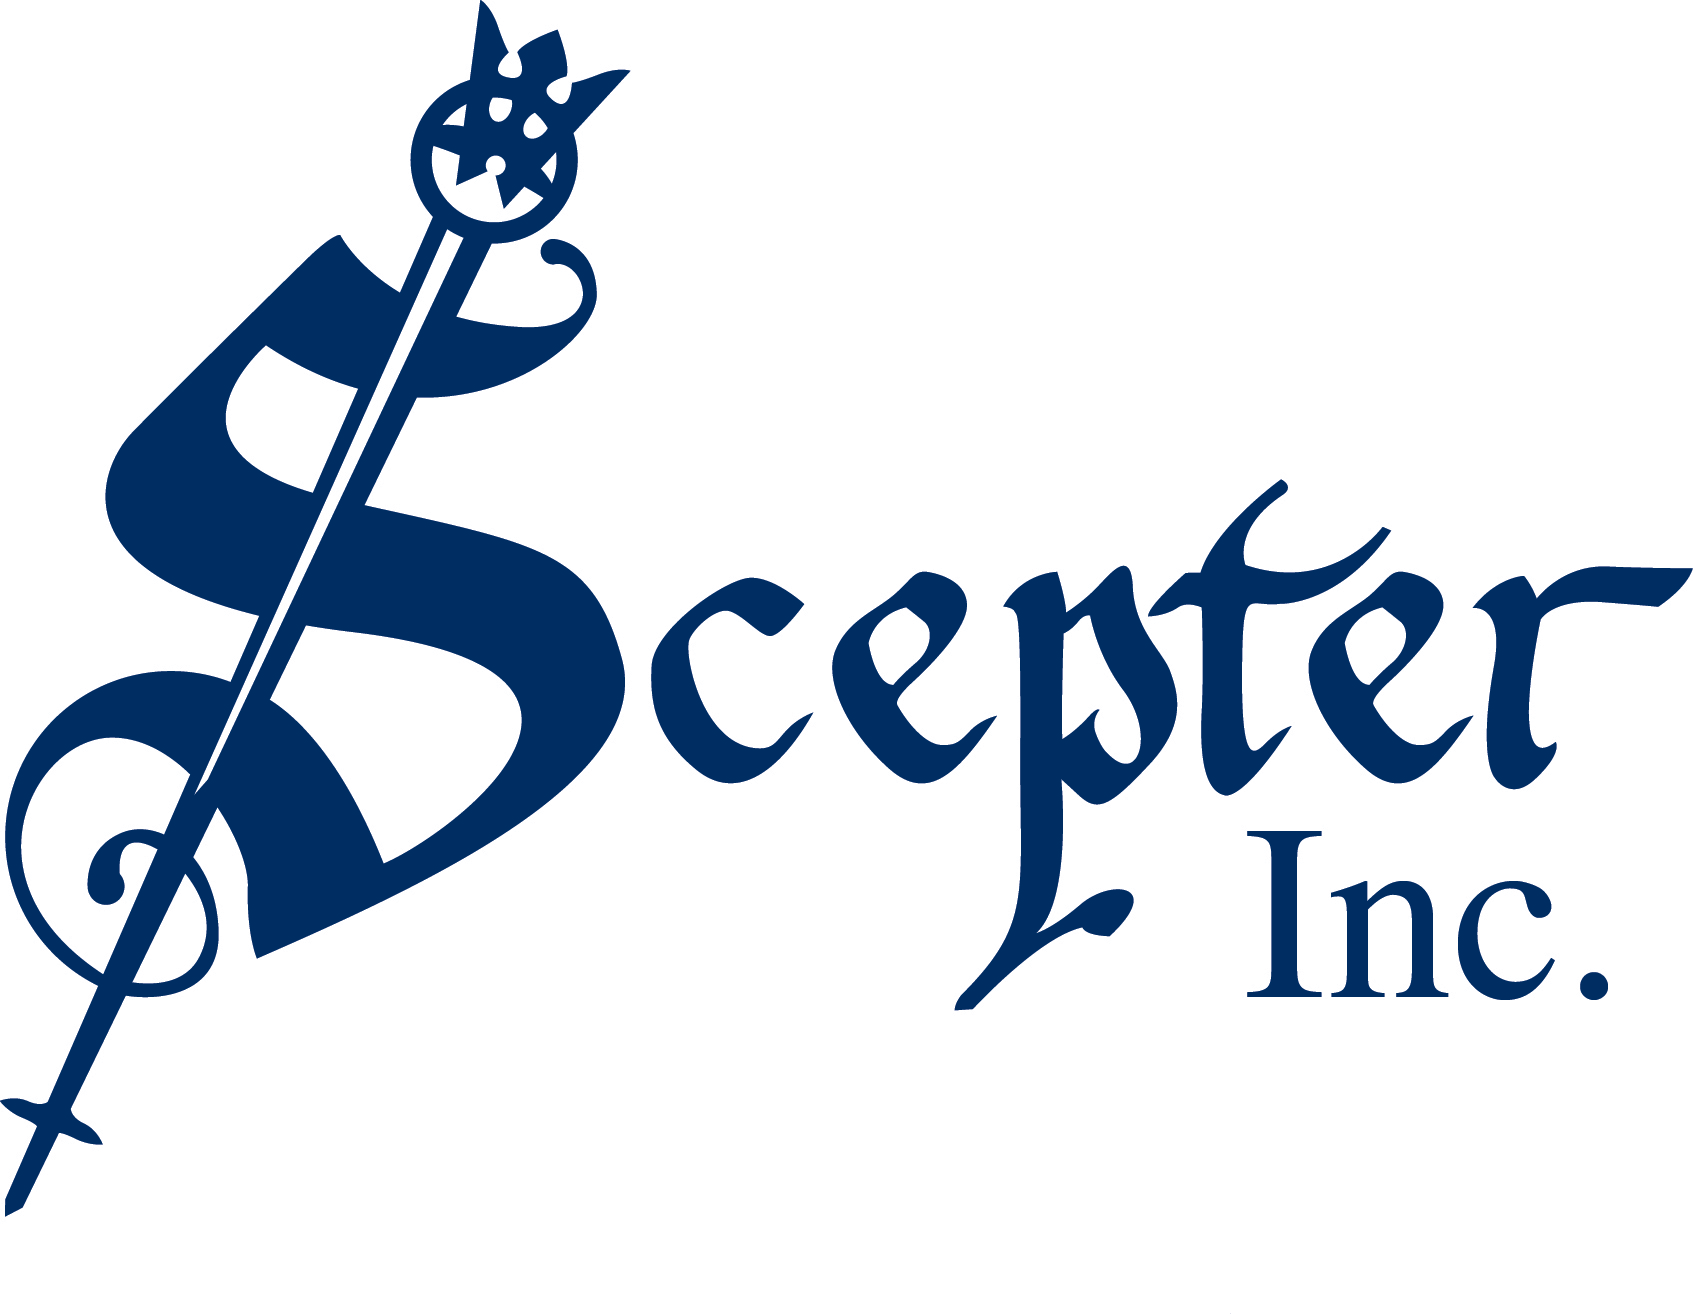 Scepter-Inc-Blue-web.png